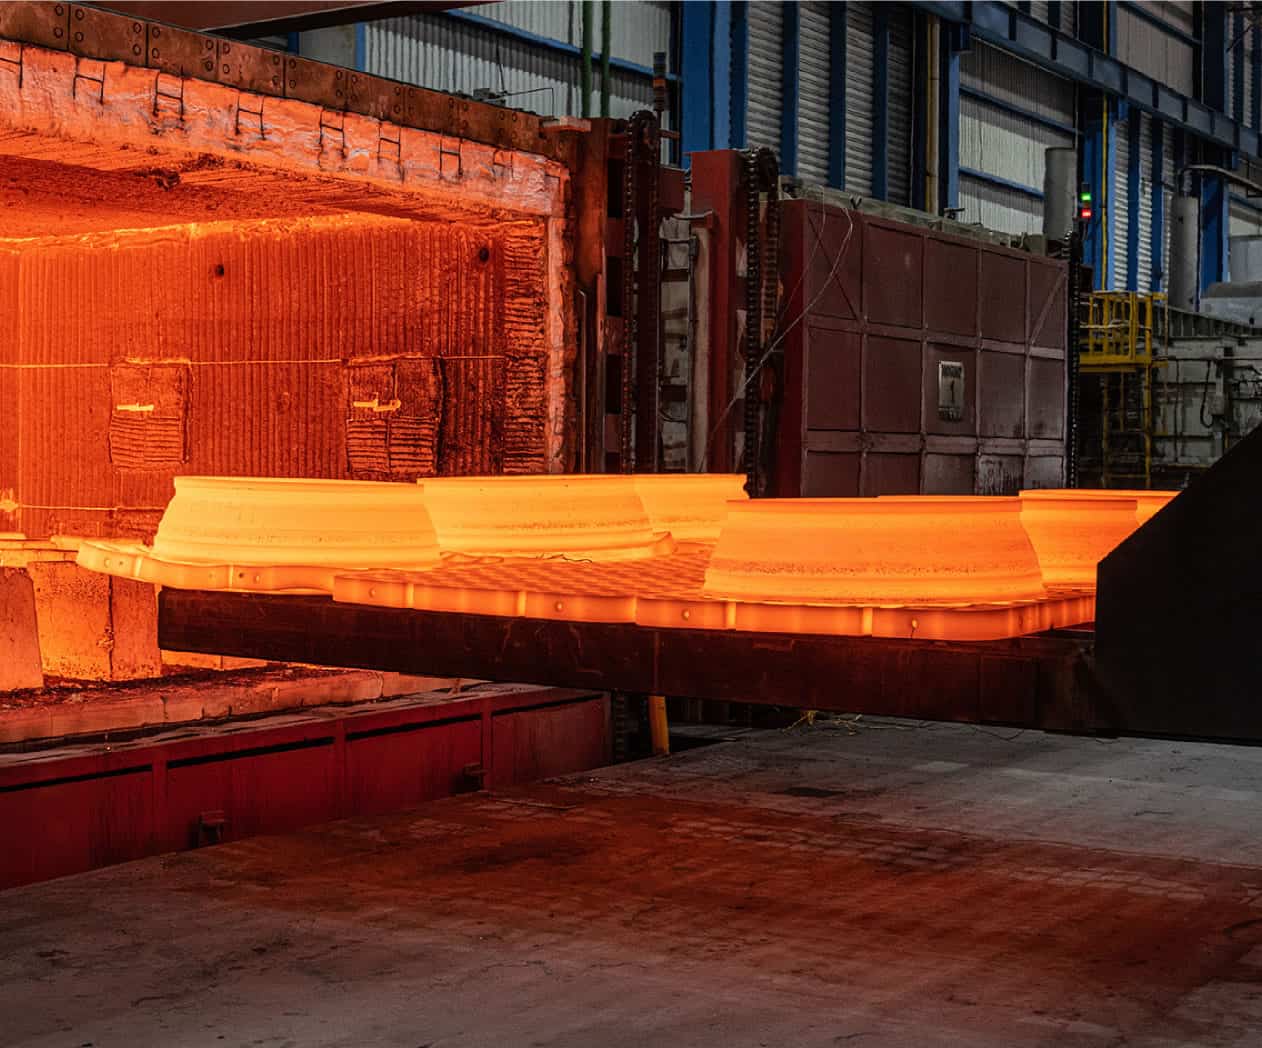 Hot steel slabs glowing orange as they exit an industrial furnace in a steel mill.